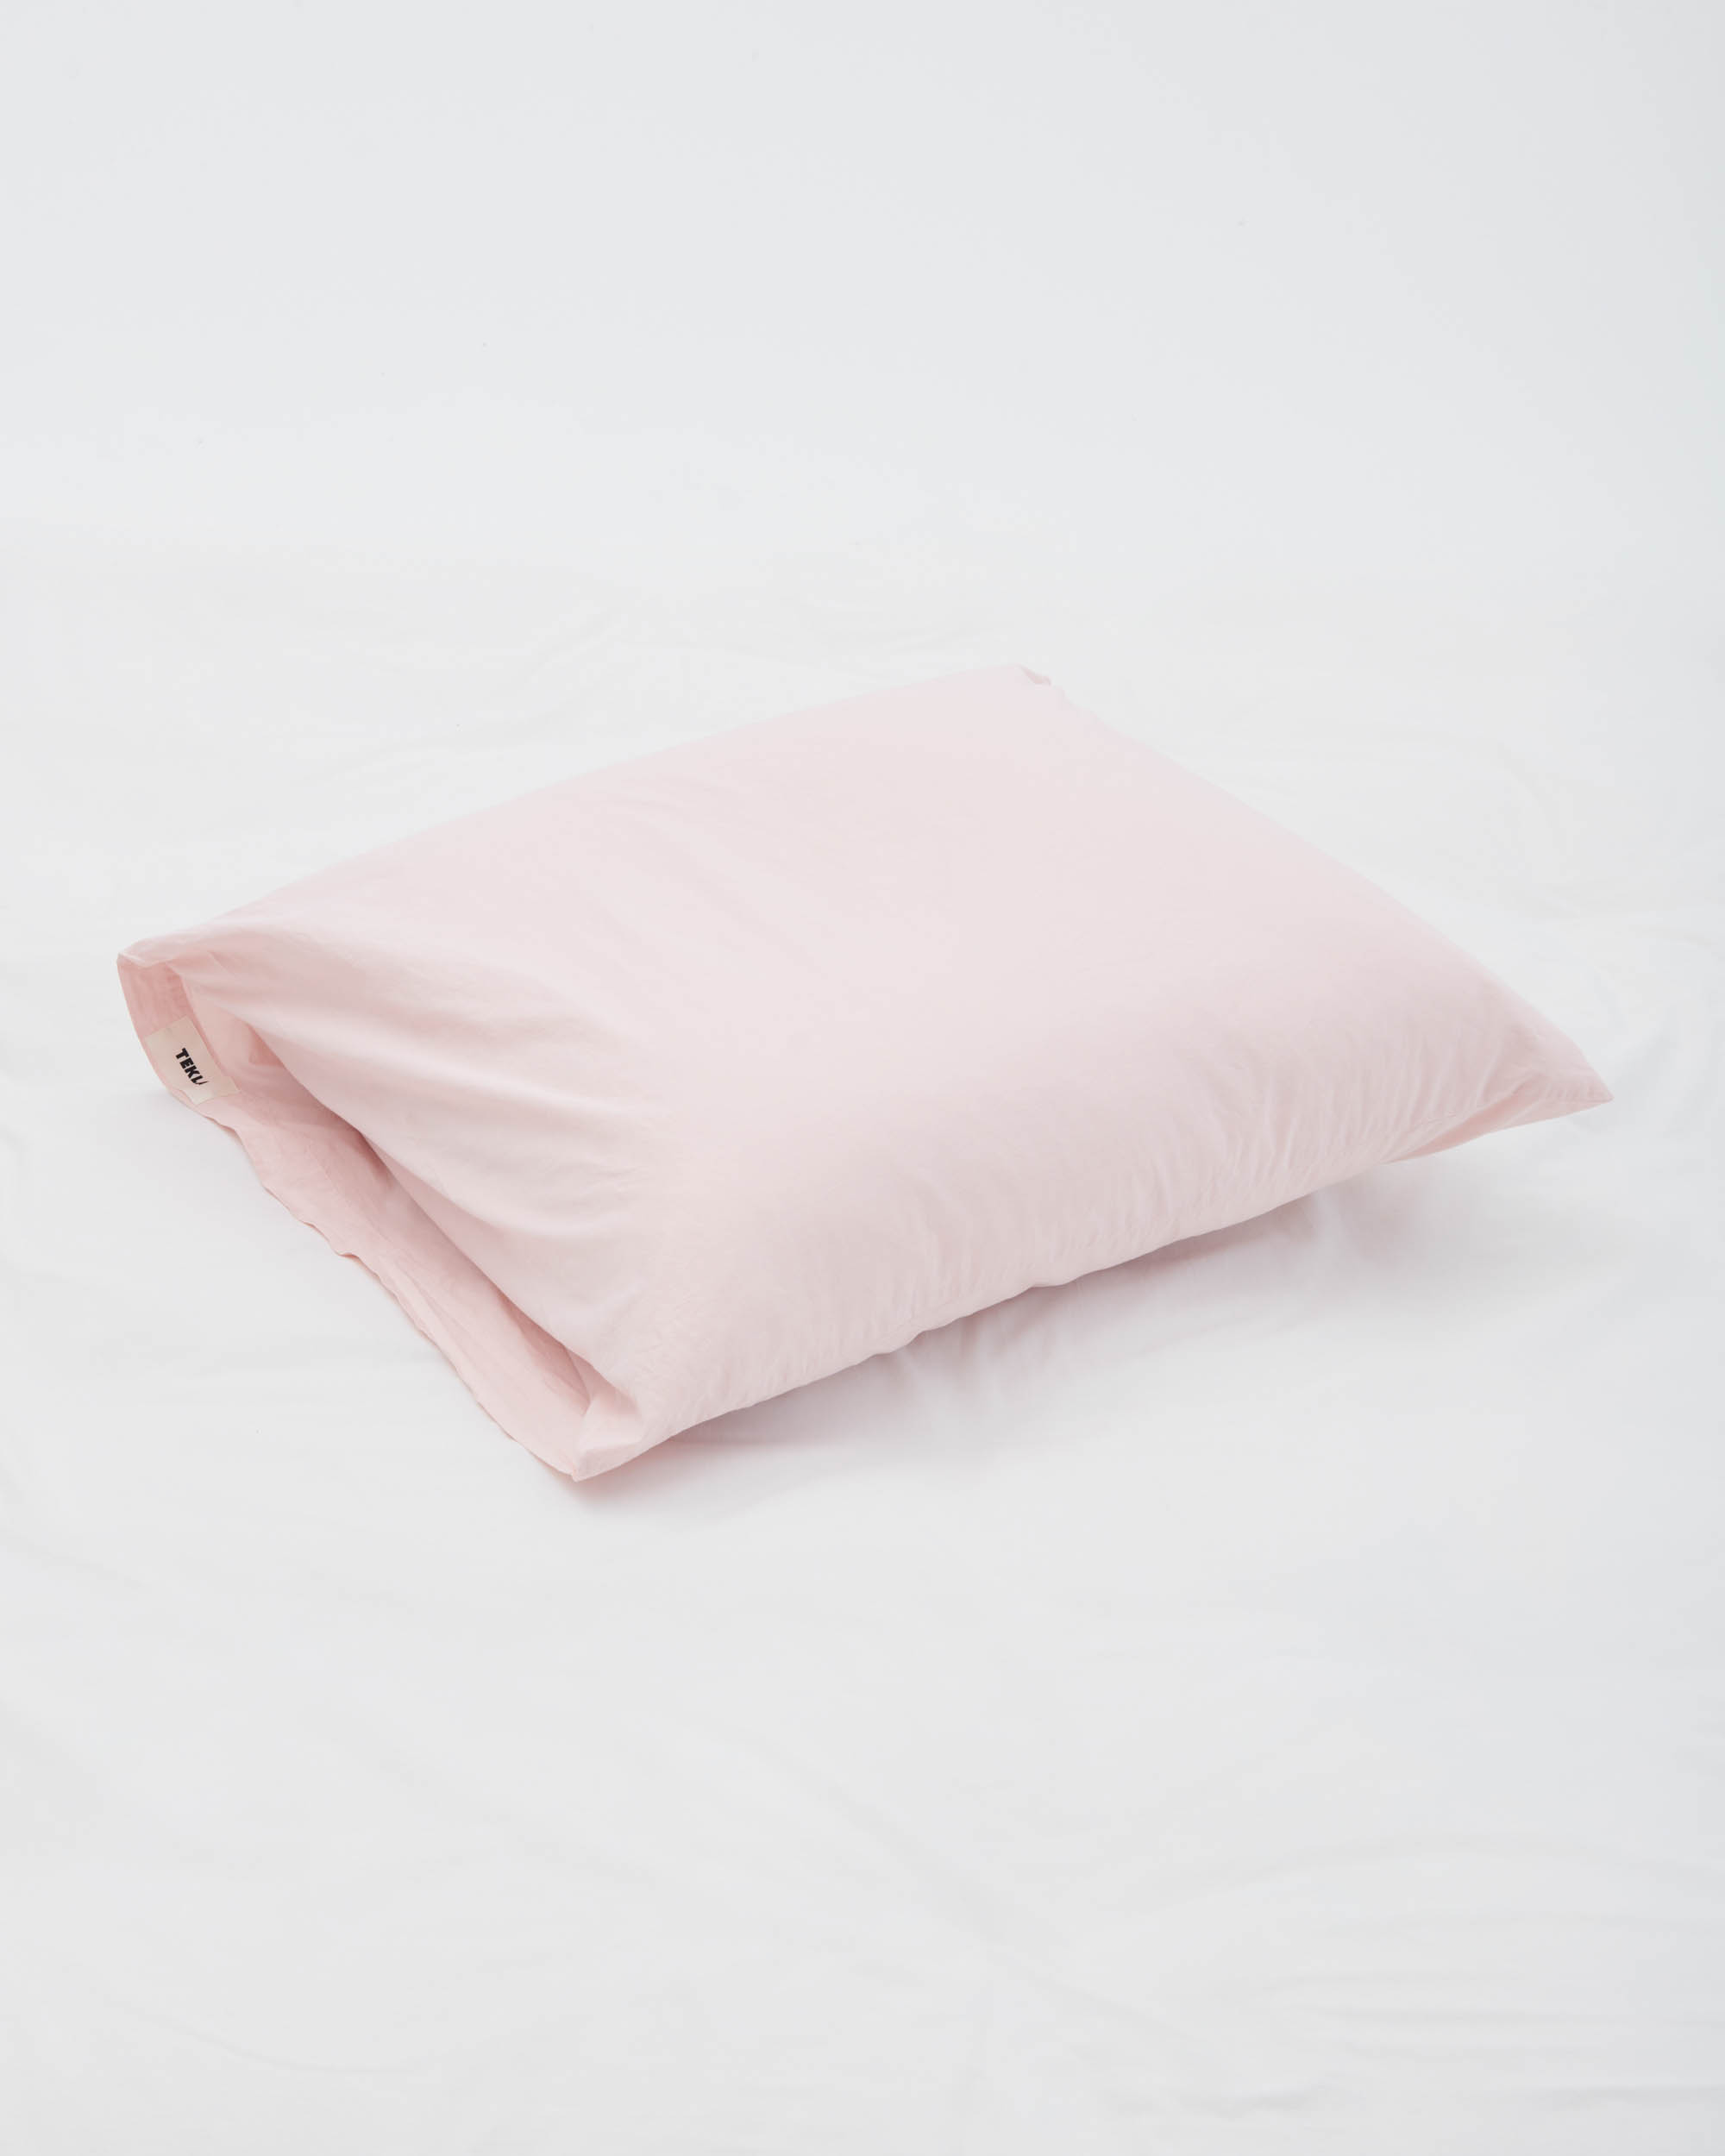 Bedding inspiration | Tekla Fabrics